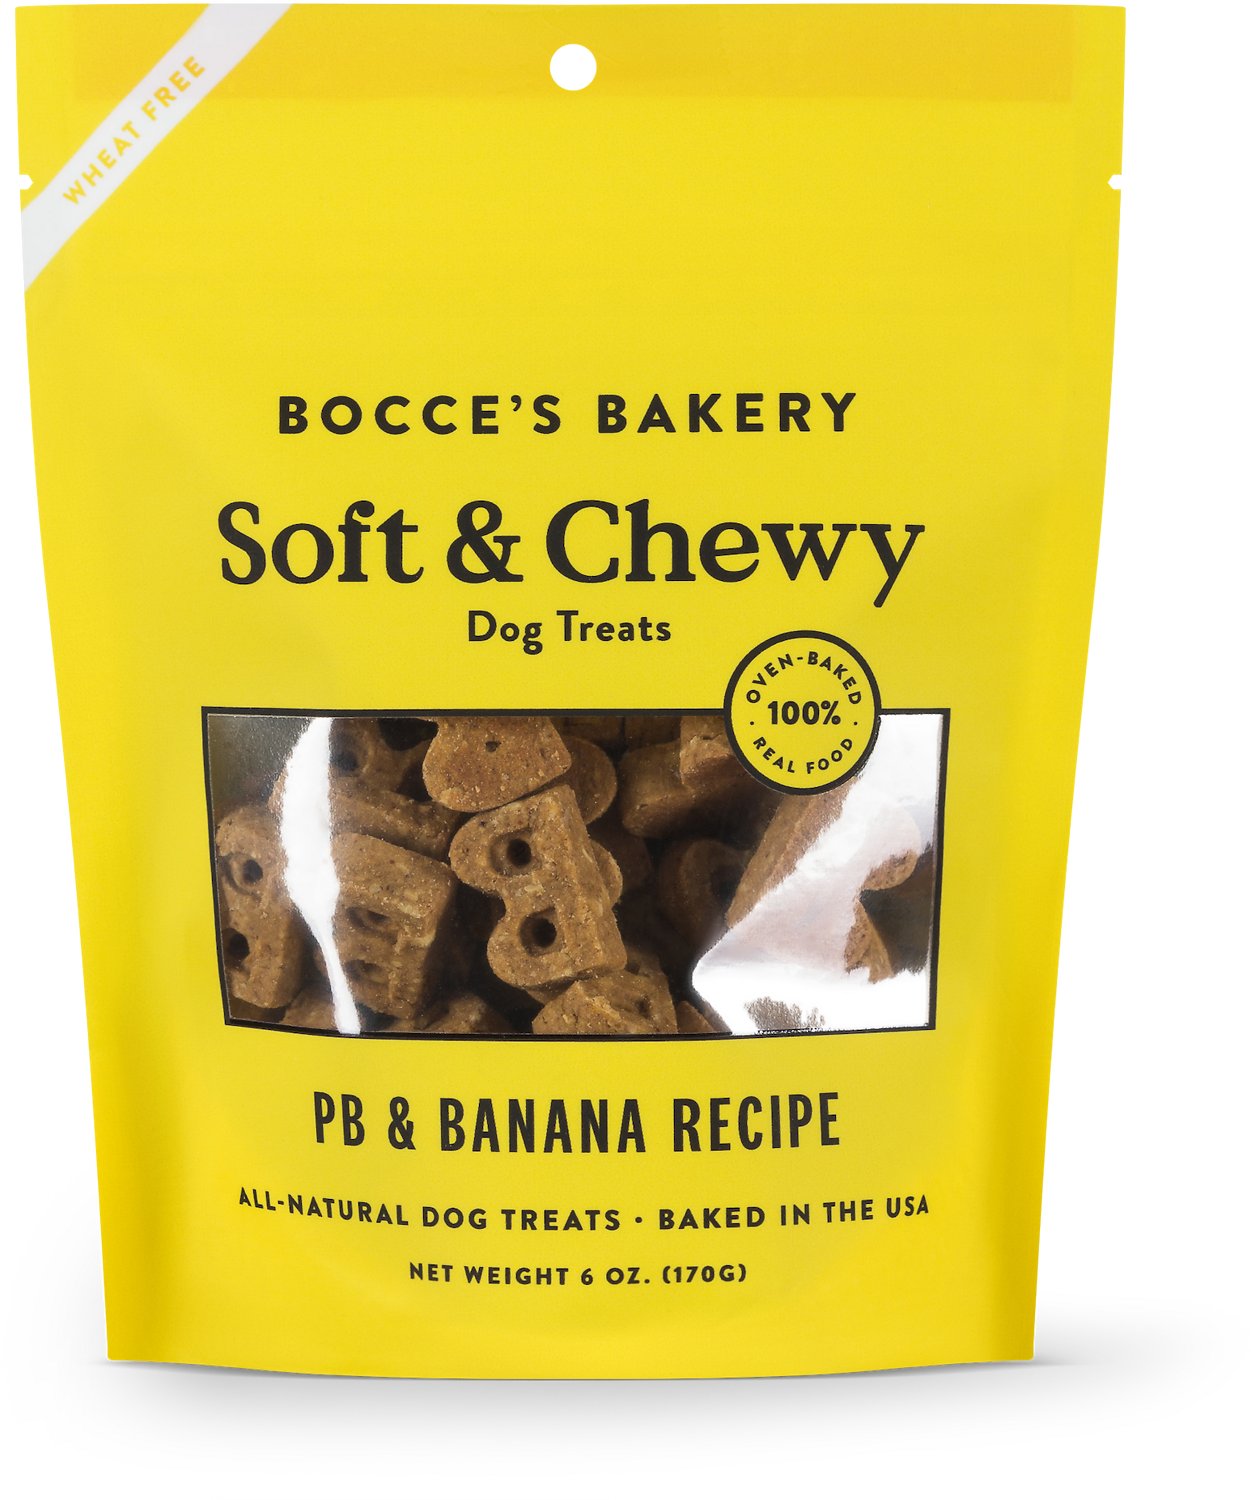 Bocce's Soft & Chewy PB & Banana 6 oz.